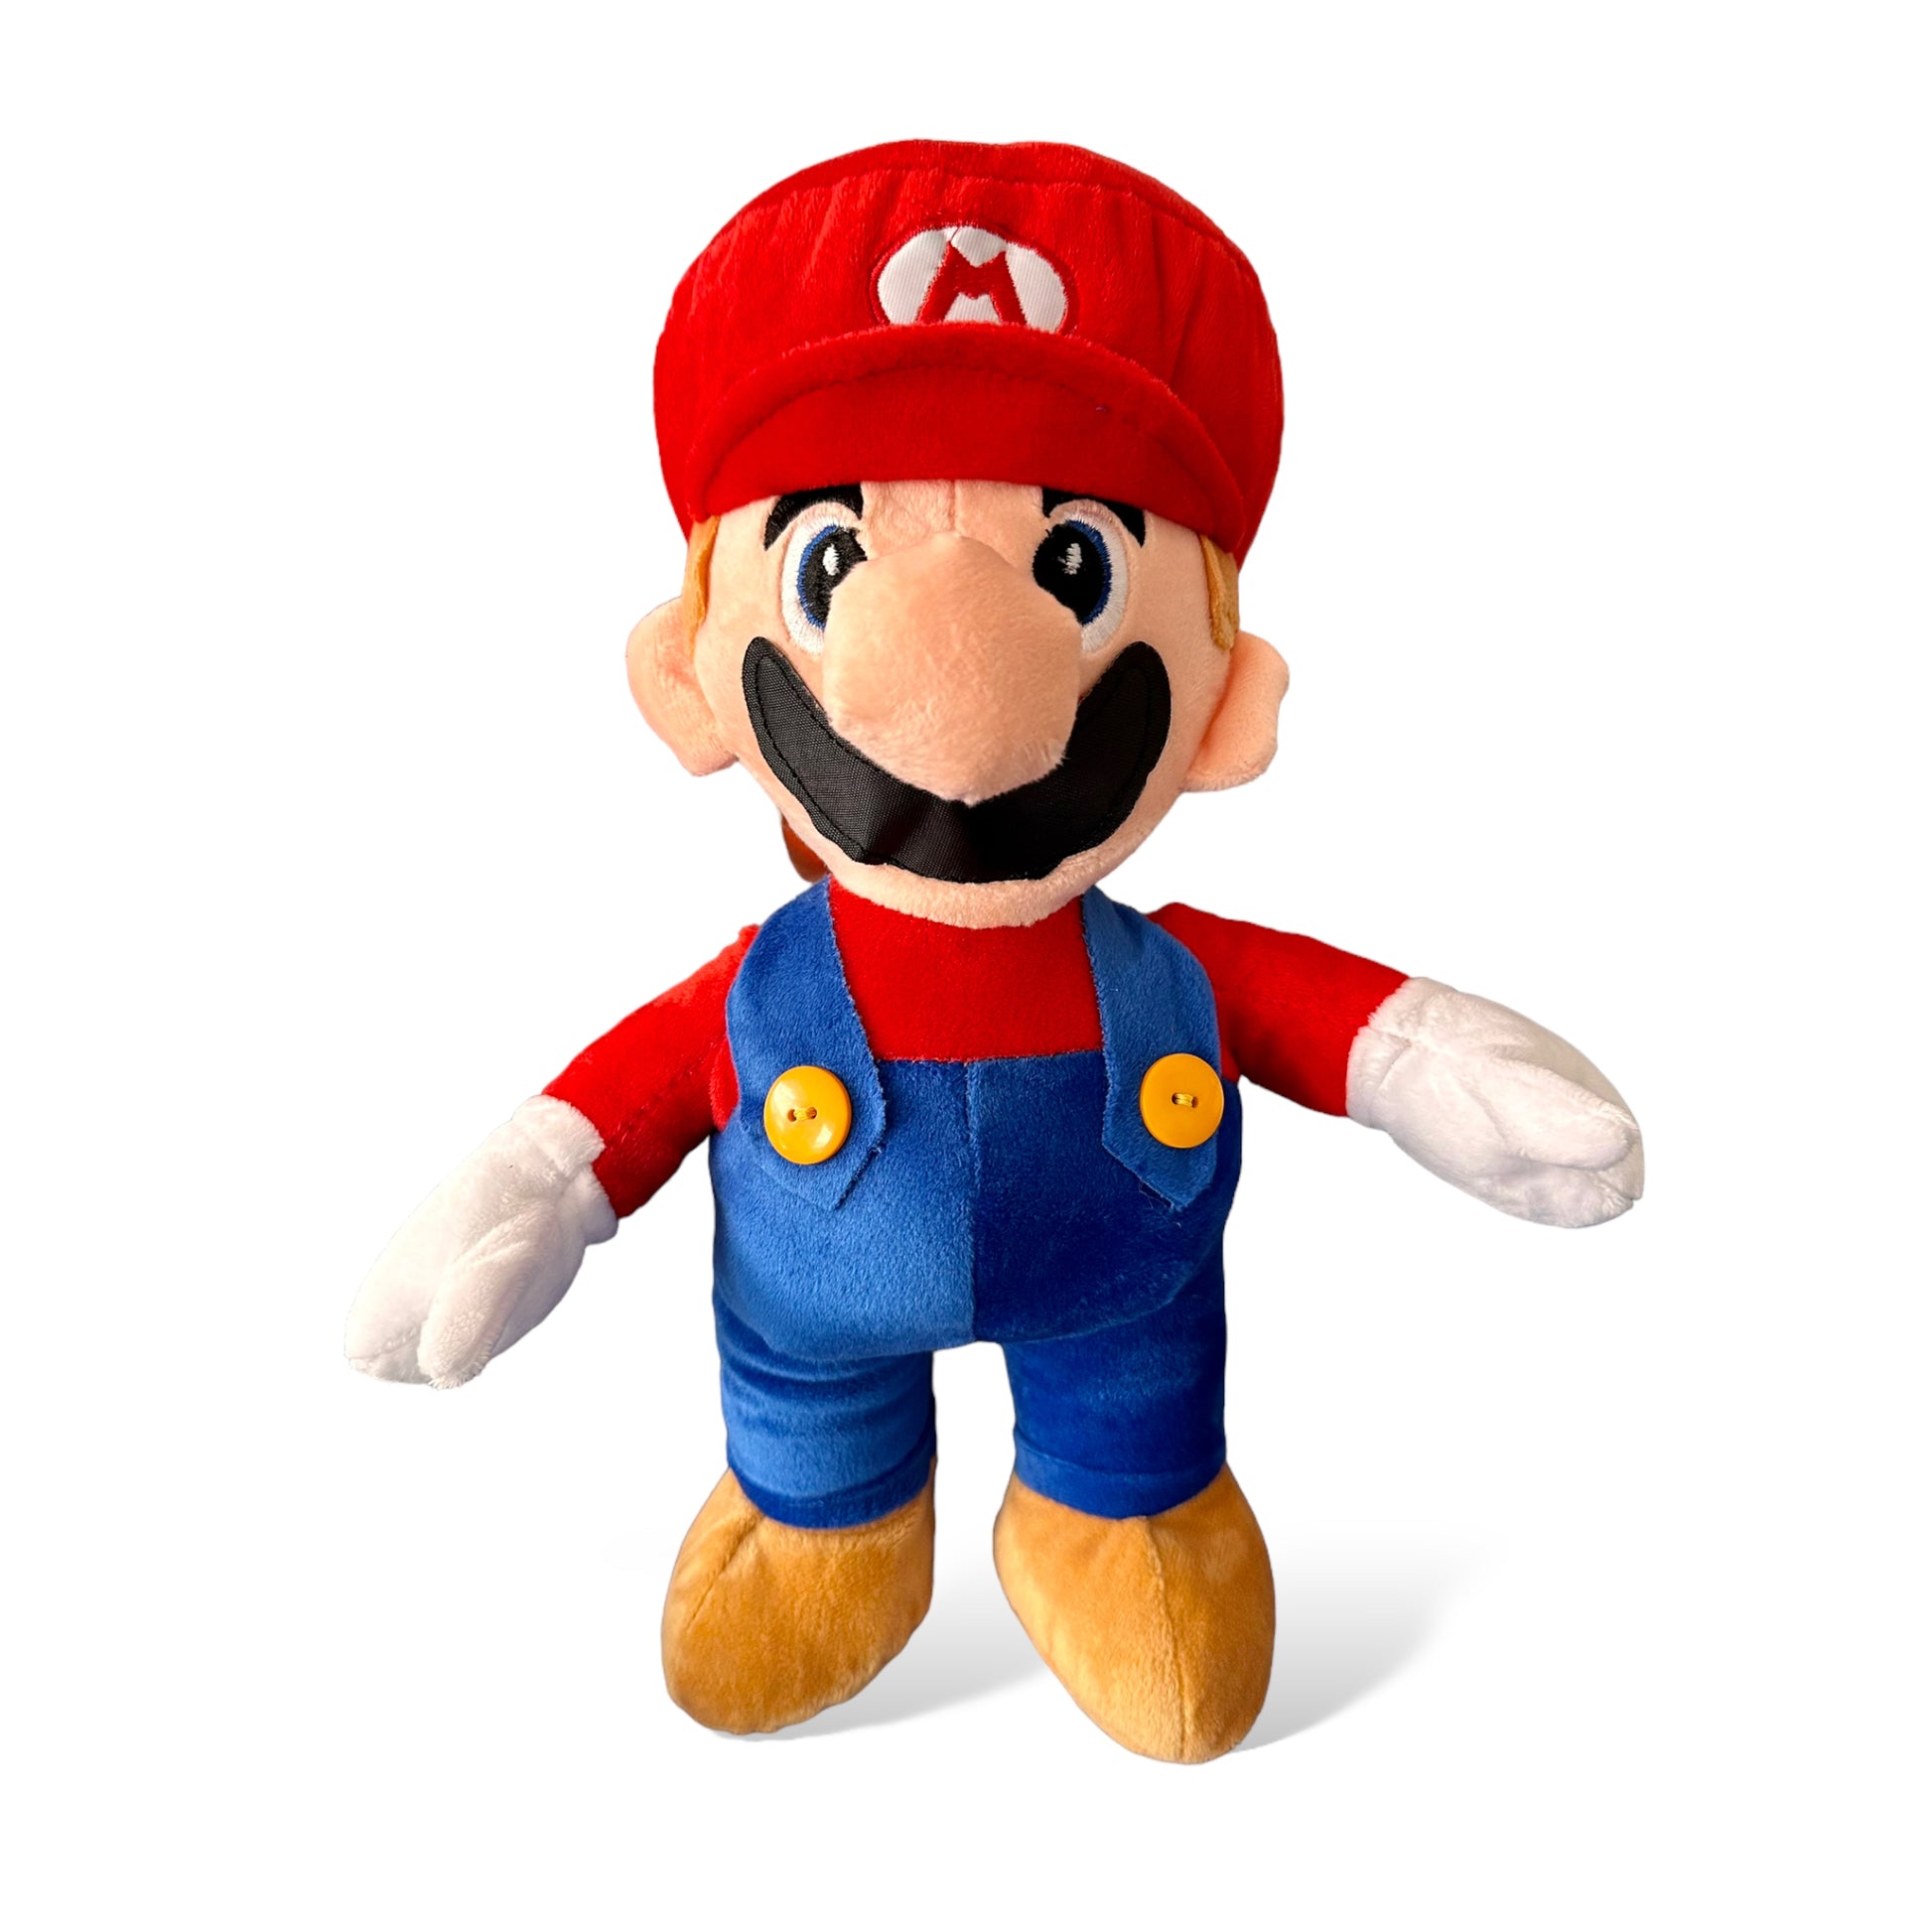 Mario Bross de peluche 38 cm – Peluches Gil